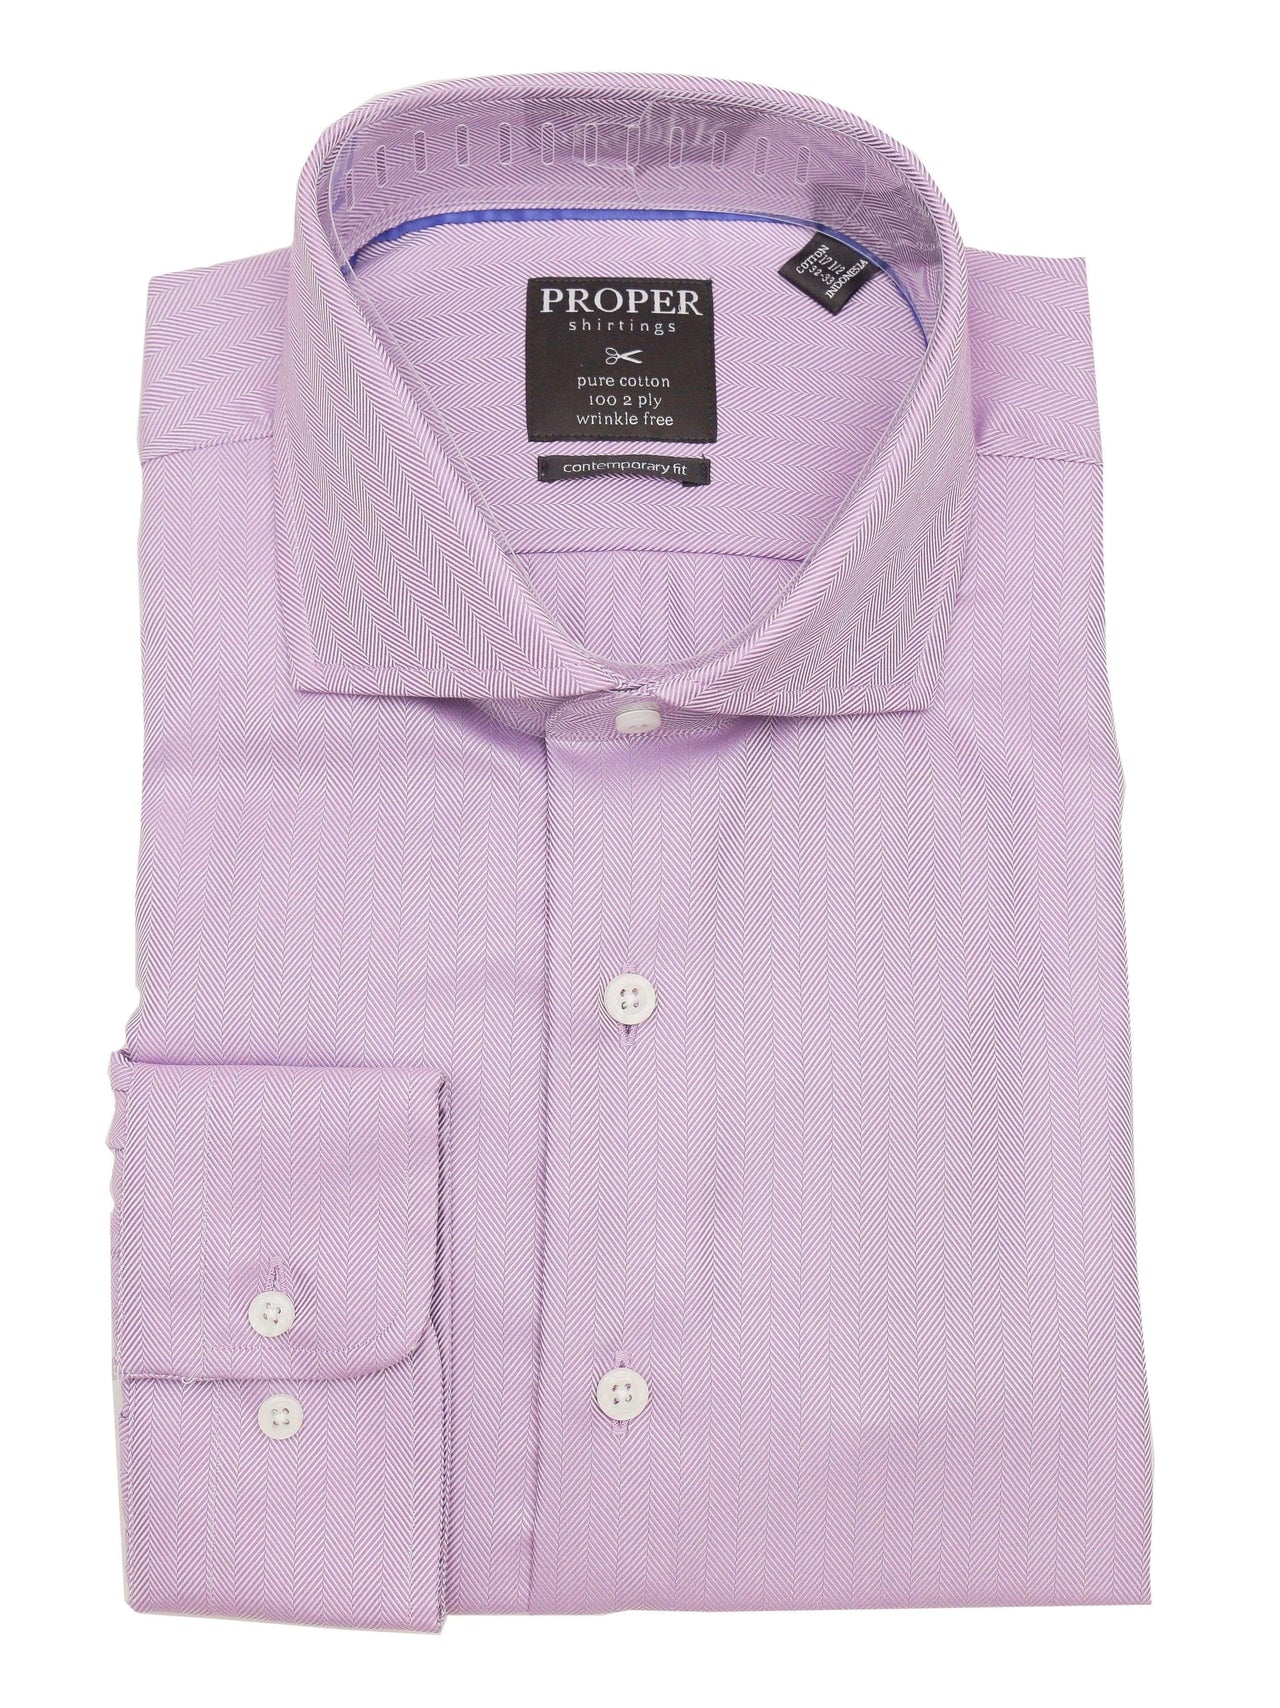 Brand P & S SHIRTS Mens Cotton Solid Purple Slim Fit Spread Collar Wrinkle Free Dress Shirt